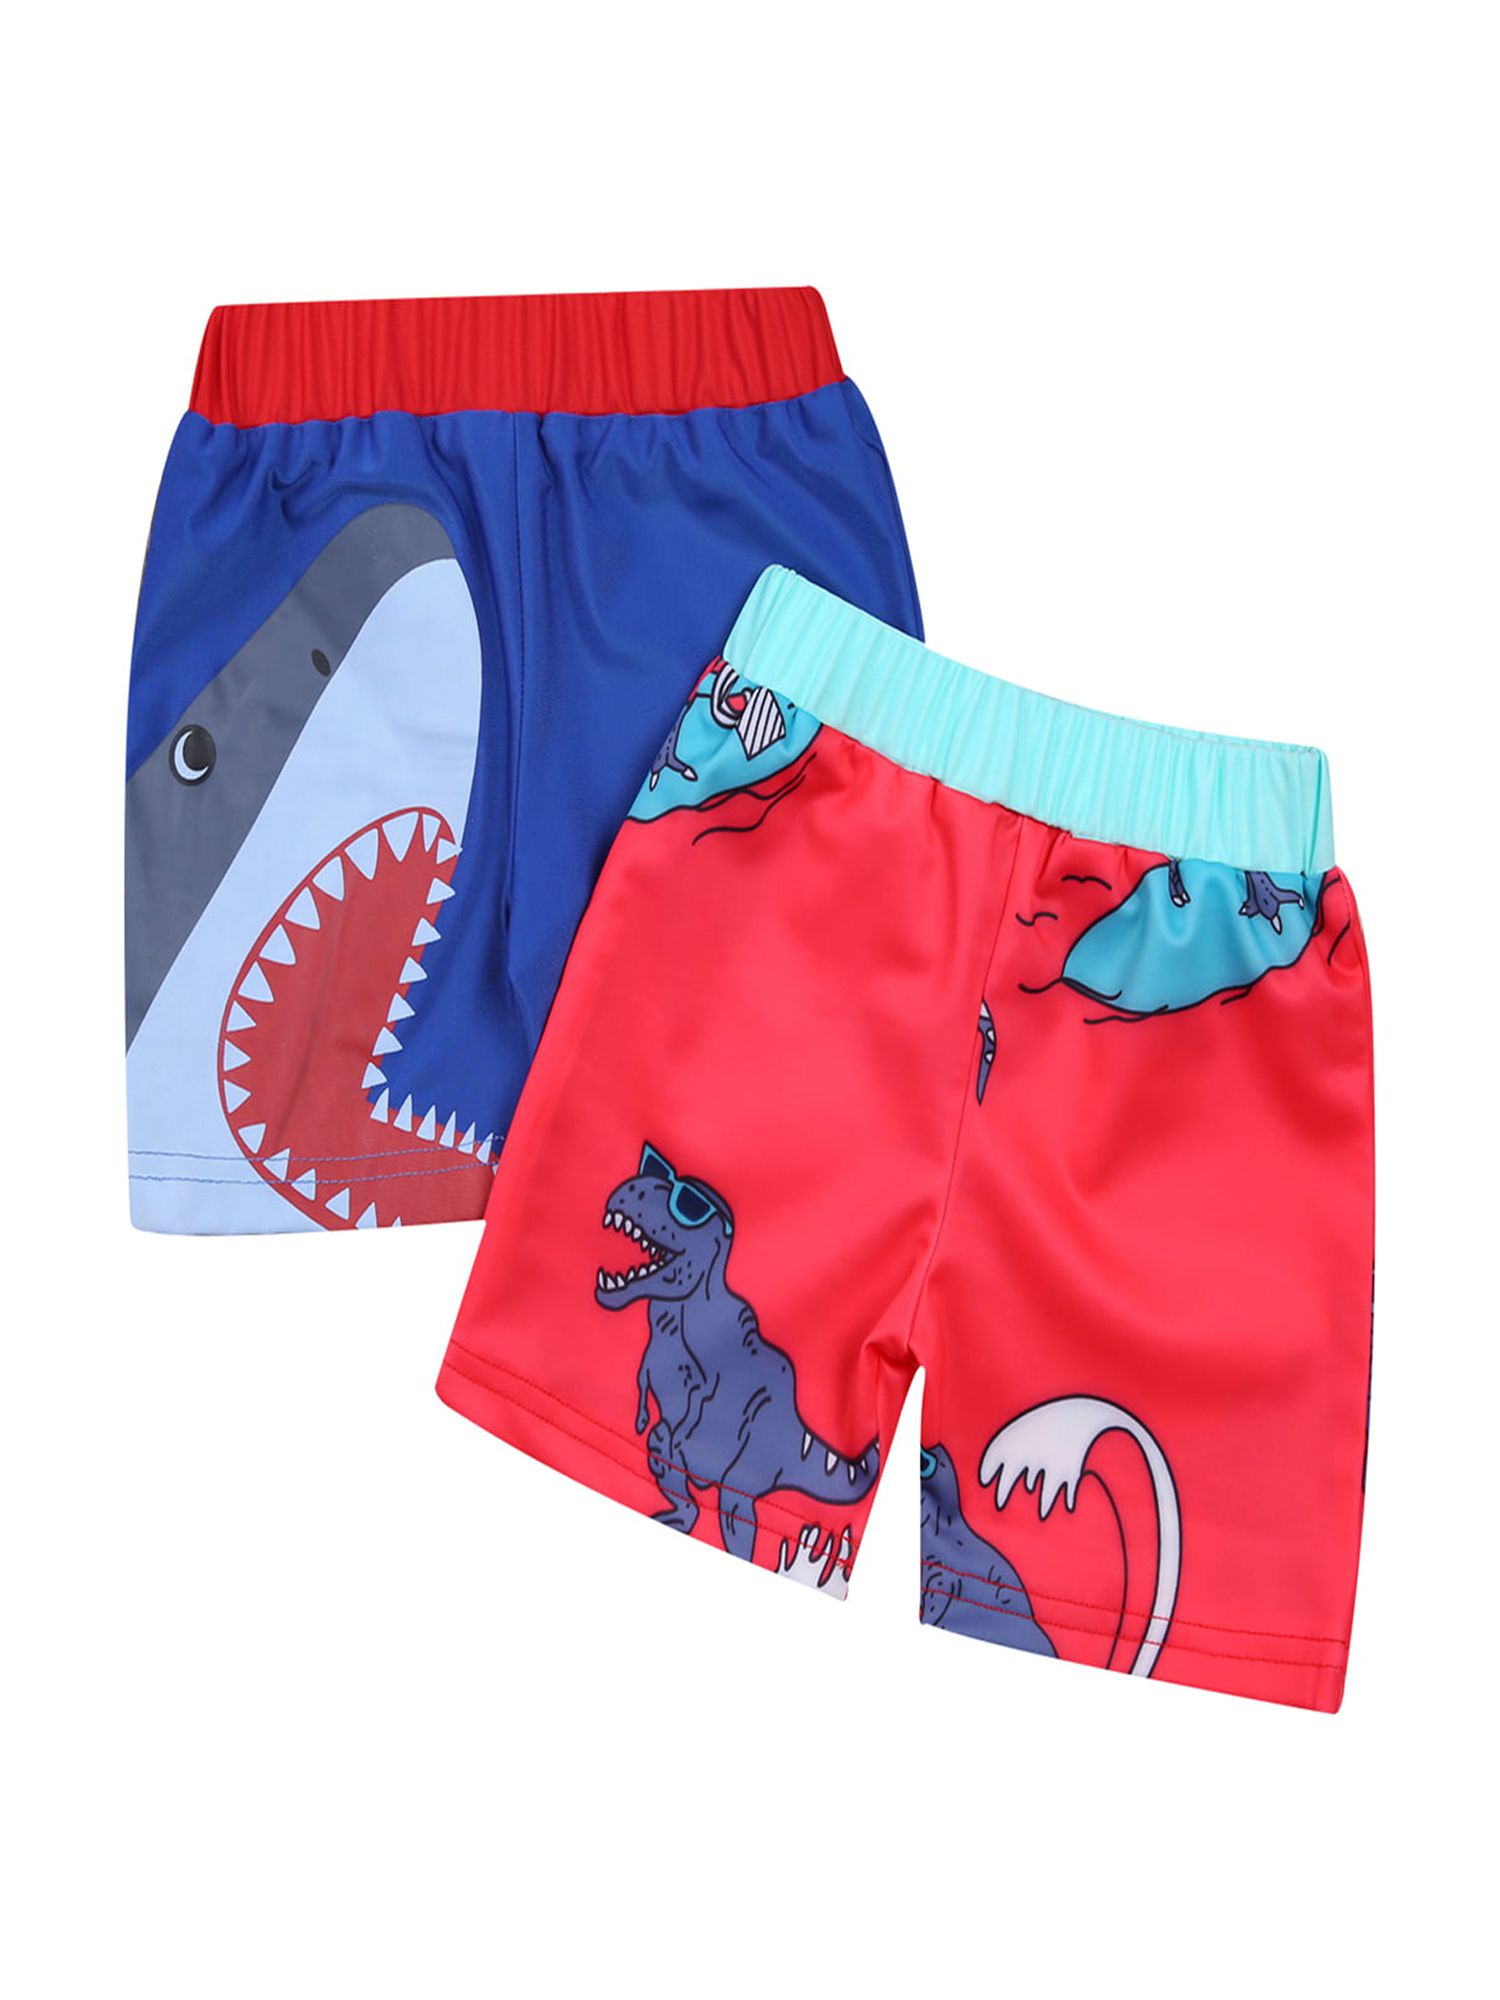 Binwwede Boys Swimwear Trunks Fish Printed Swim Shorts Toddler Baby Little Boy Summer Beach Swimsuits - image 5 of 6